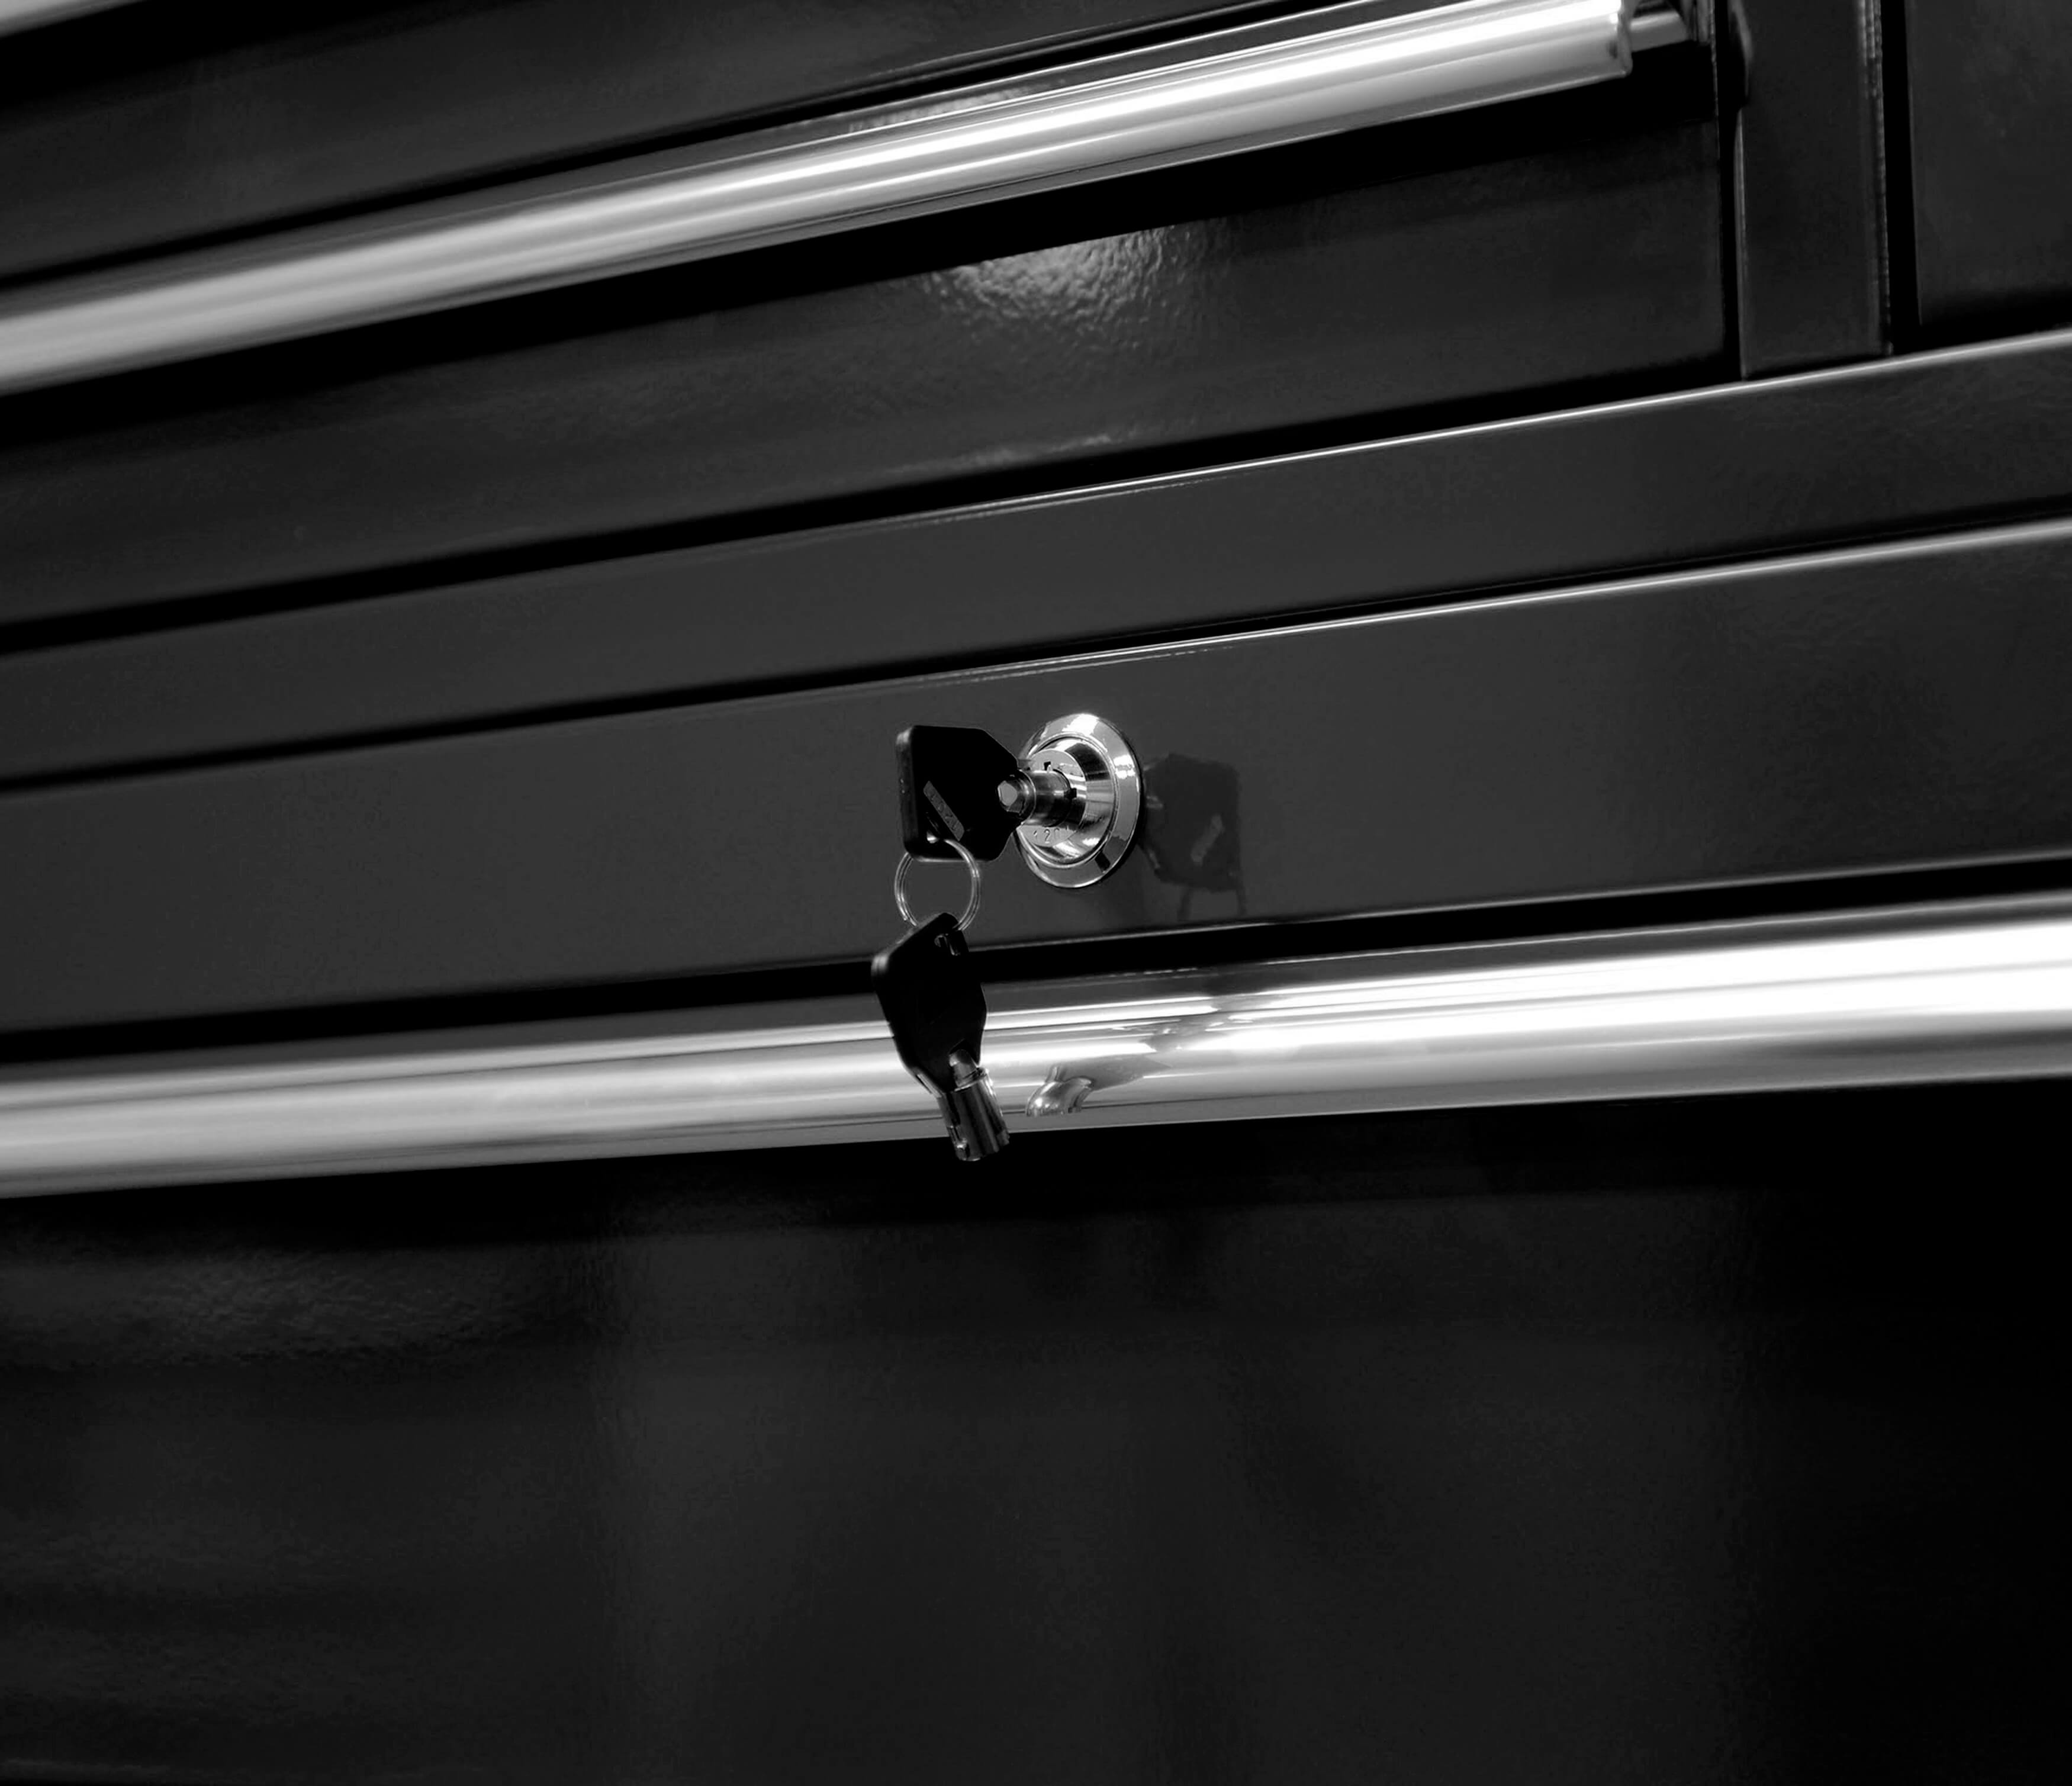 Extreme Tools® 41" 11 Drawer Standard Roller Cabinet